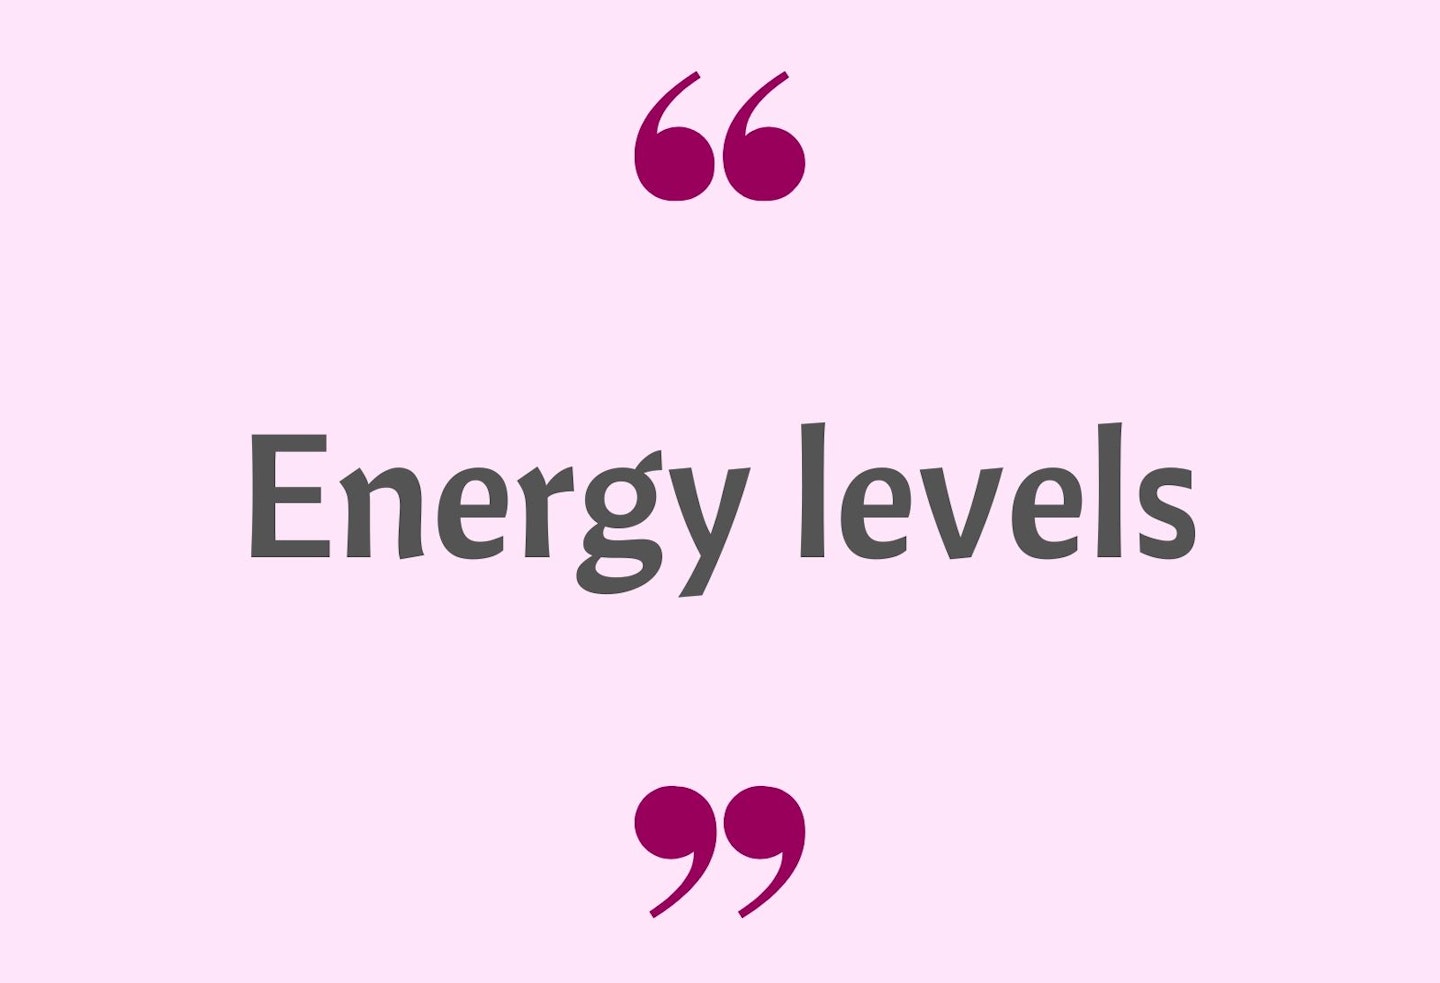 23) Energy levels